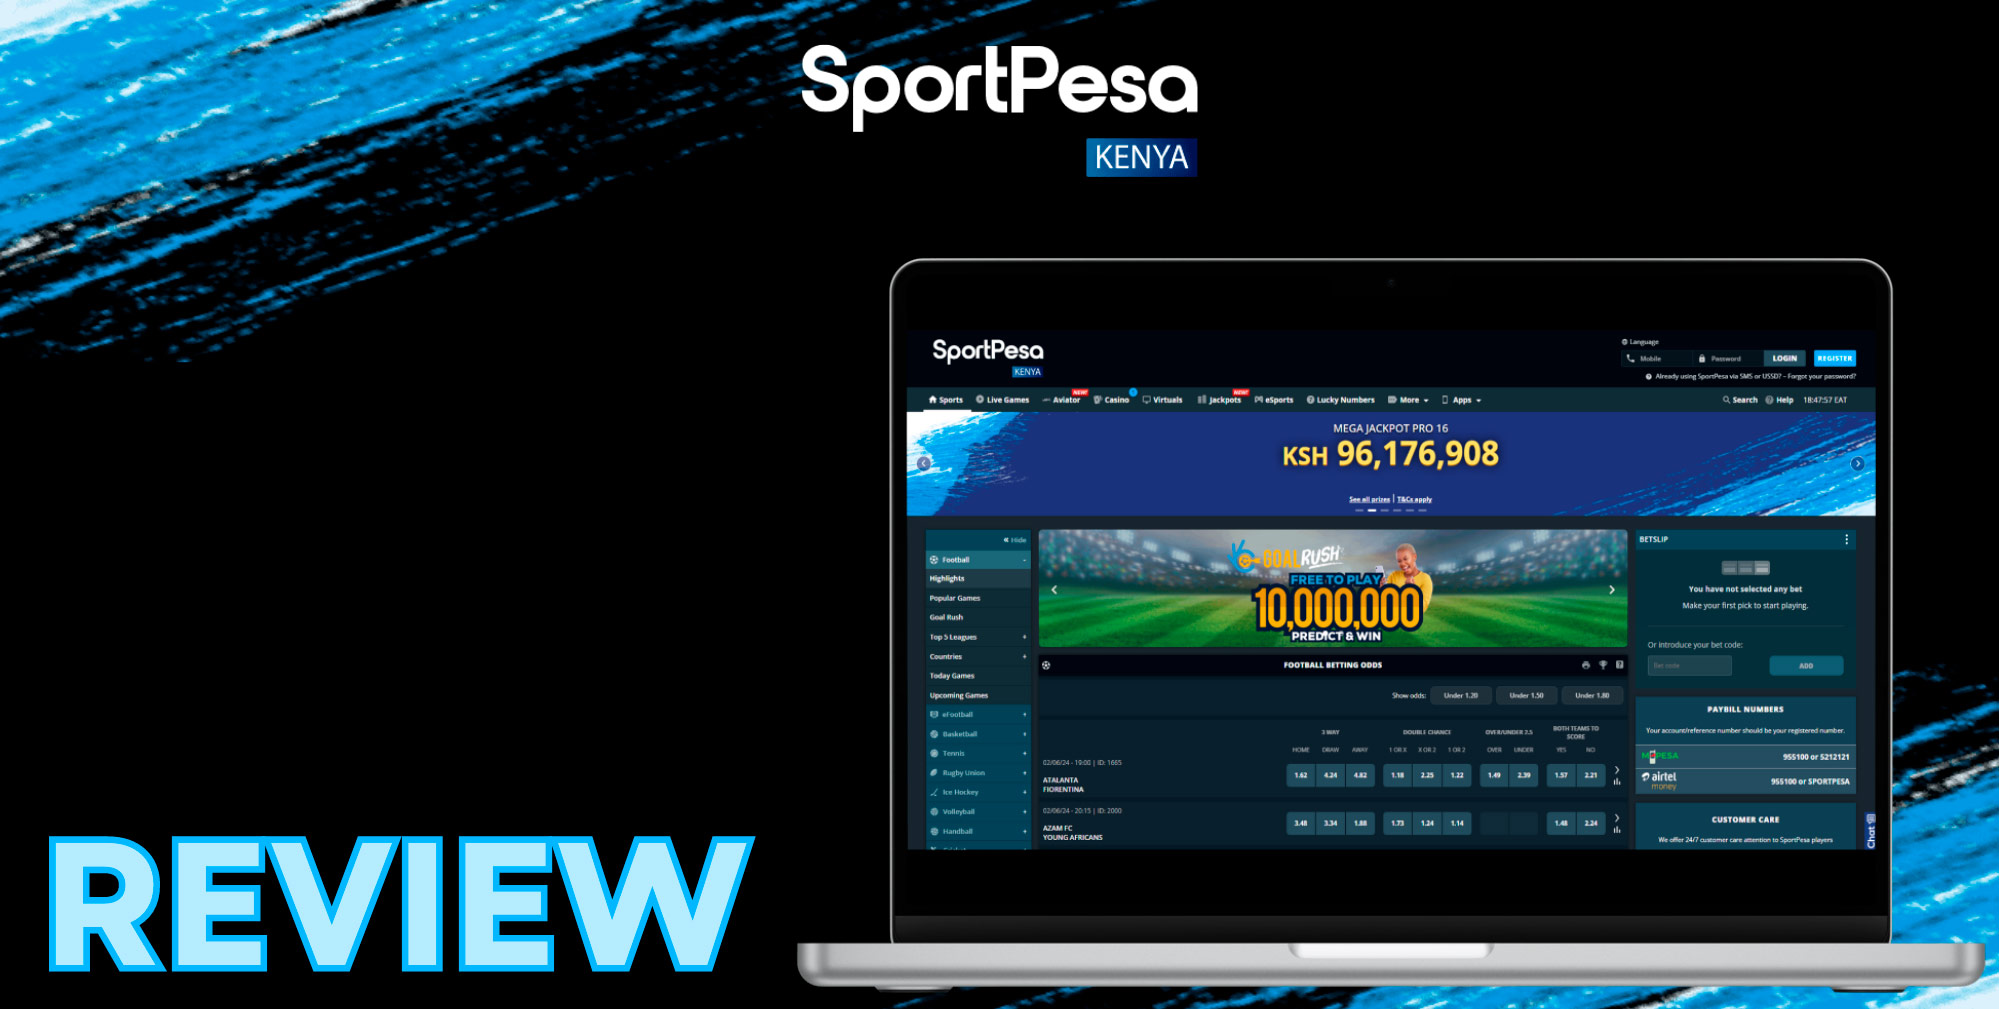 The Sportpesa website has an attractive design